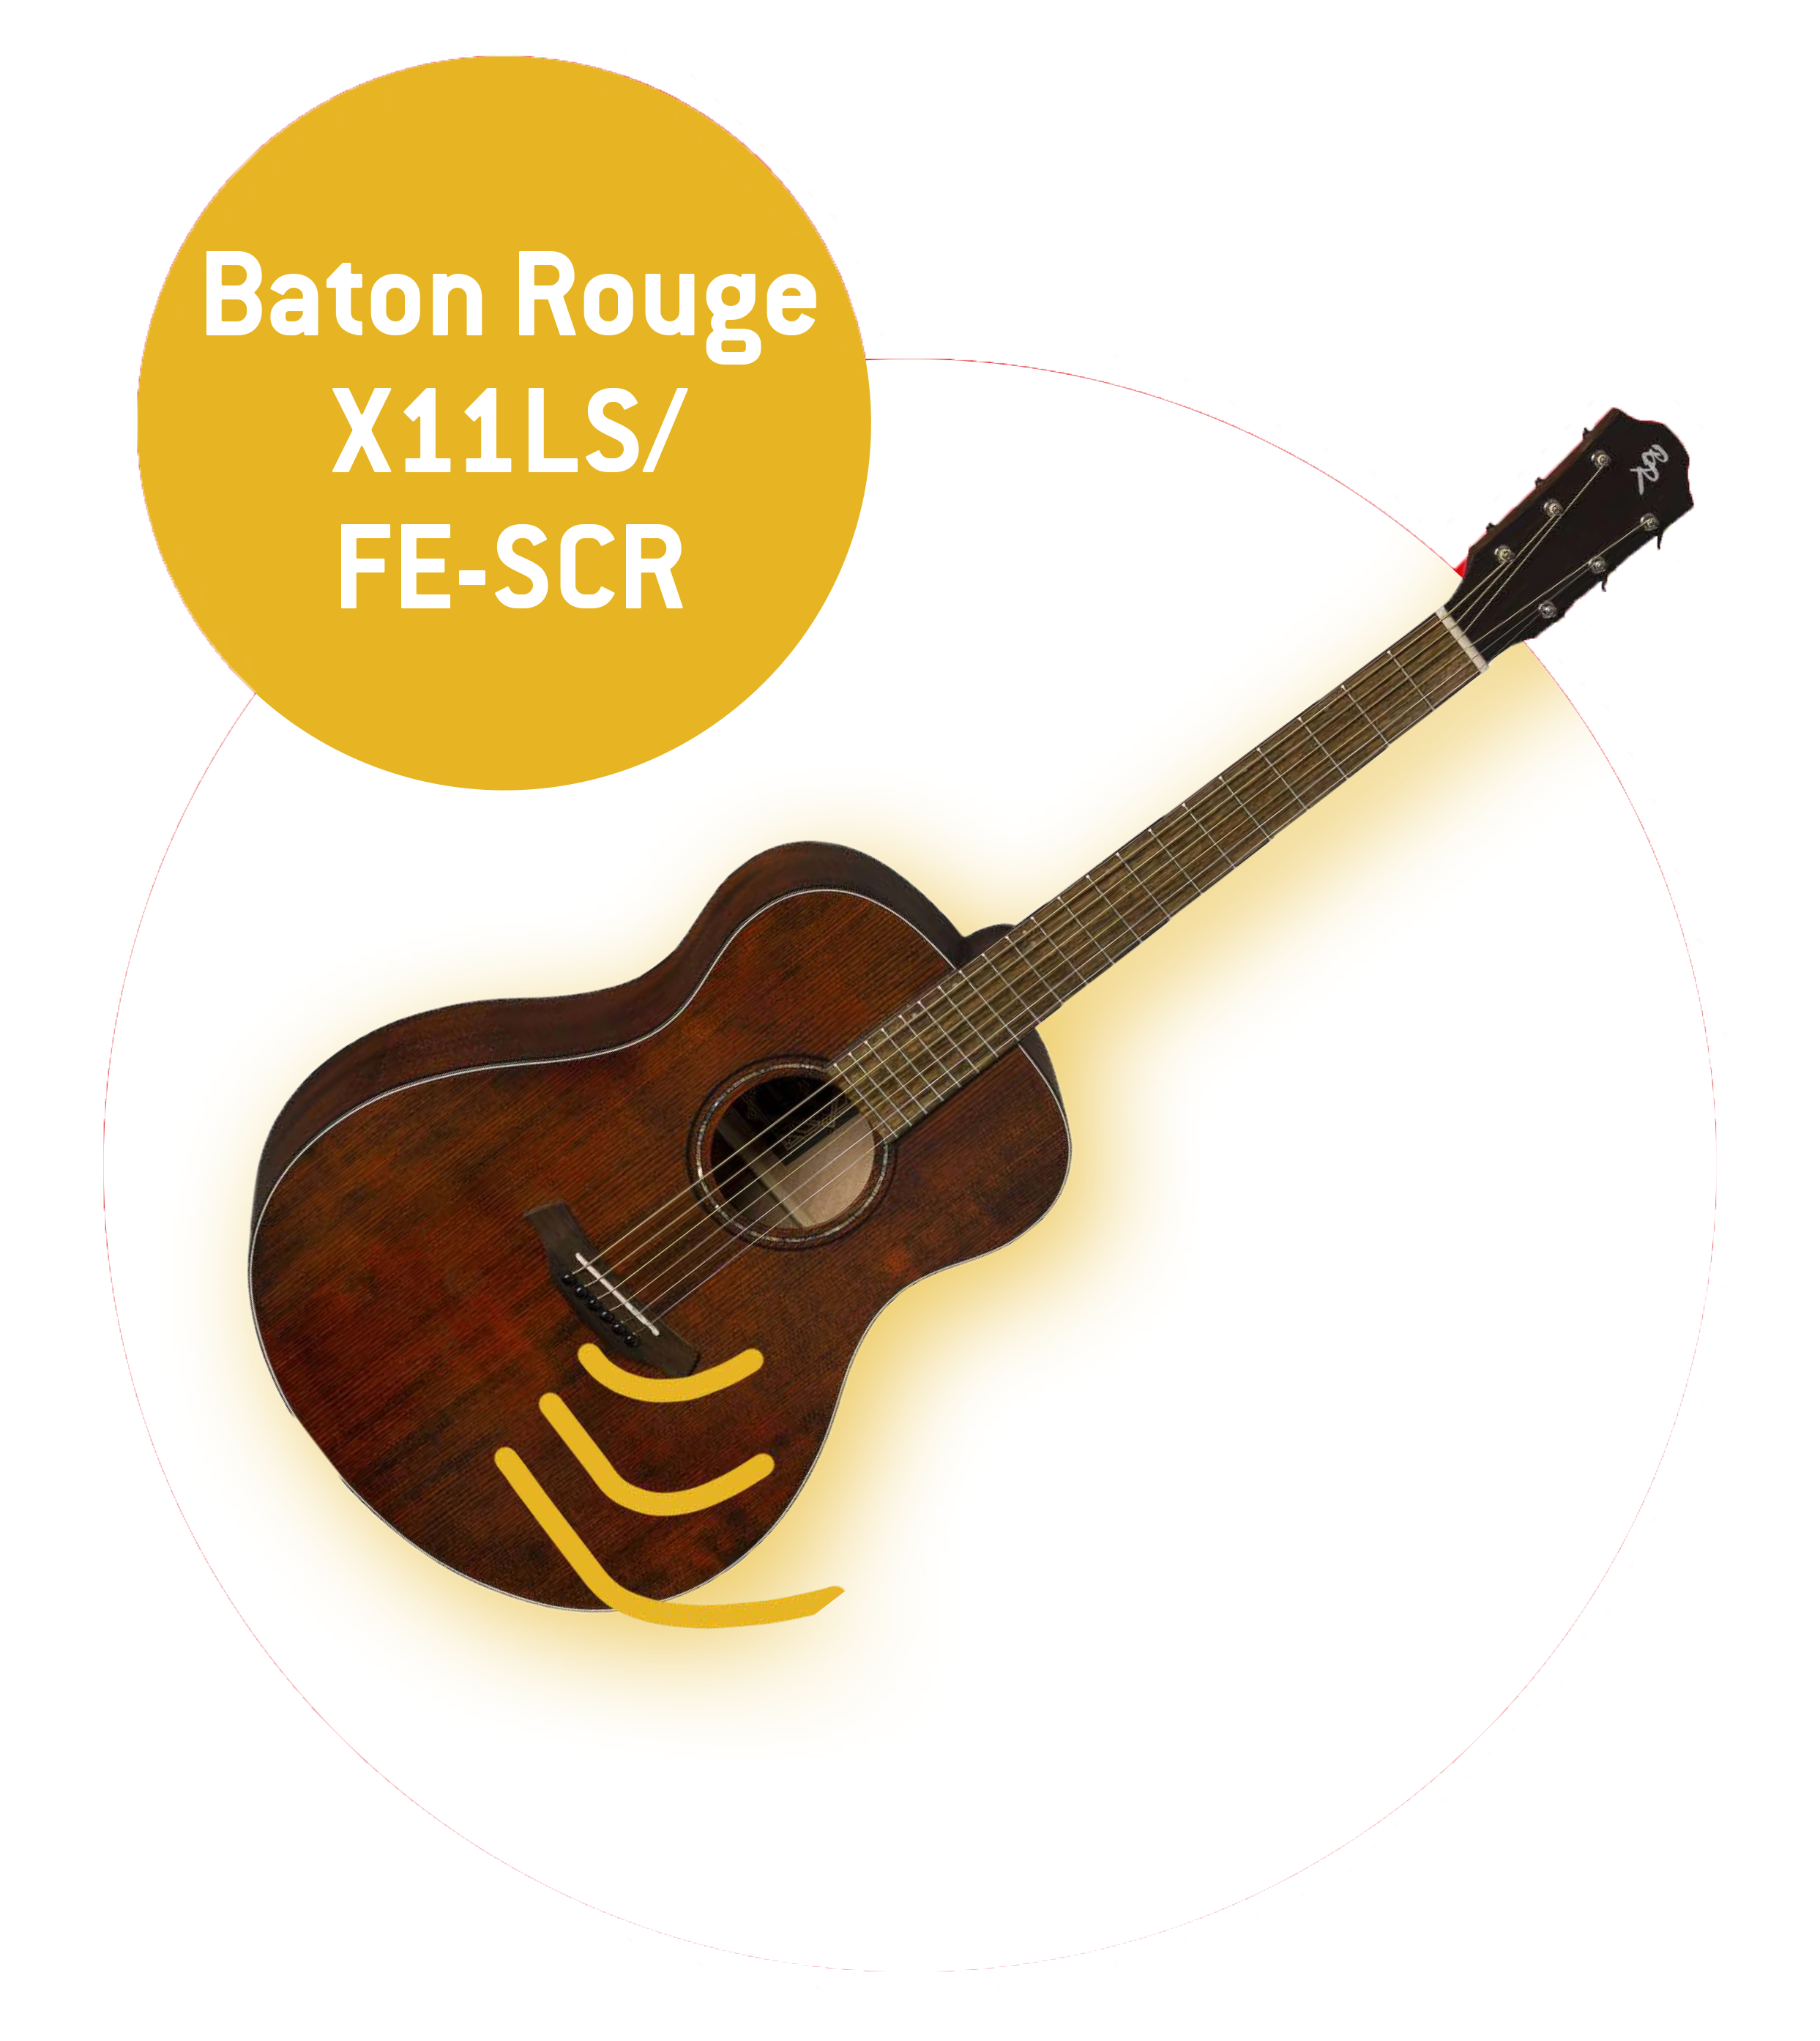 BATON ROUGE X11LS